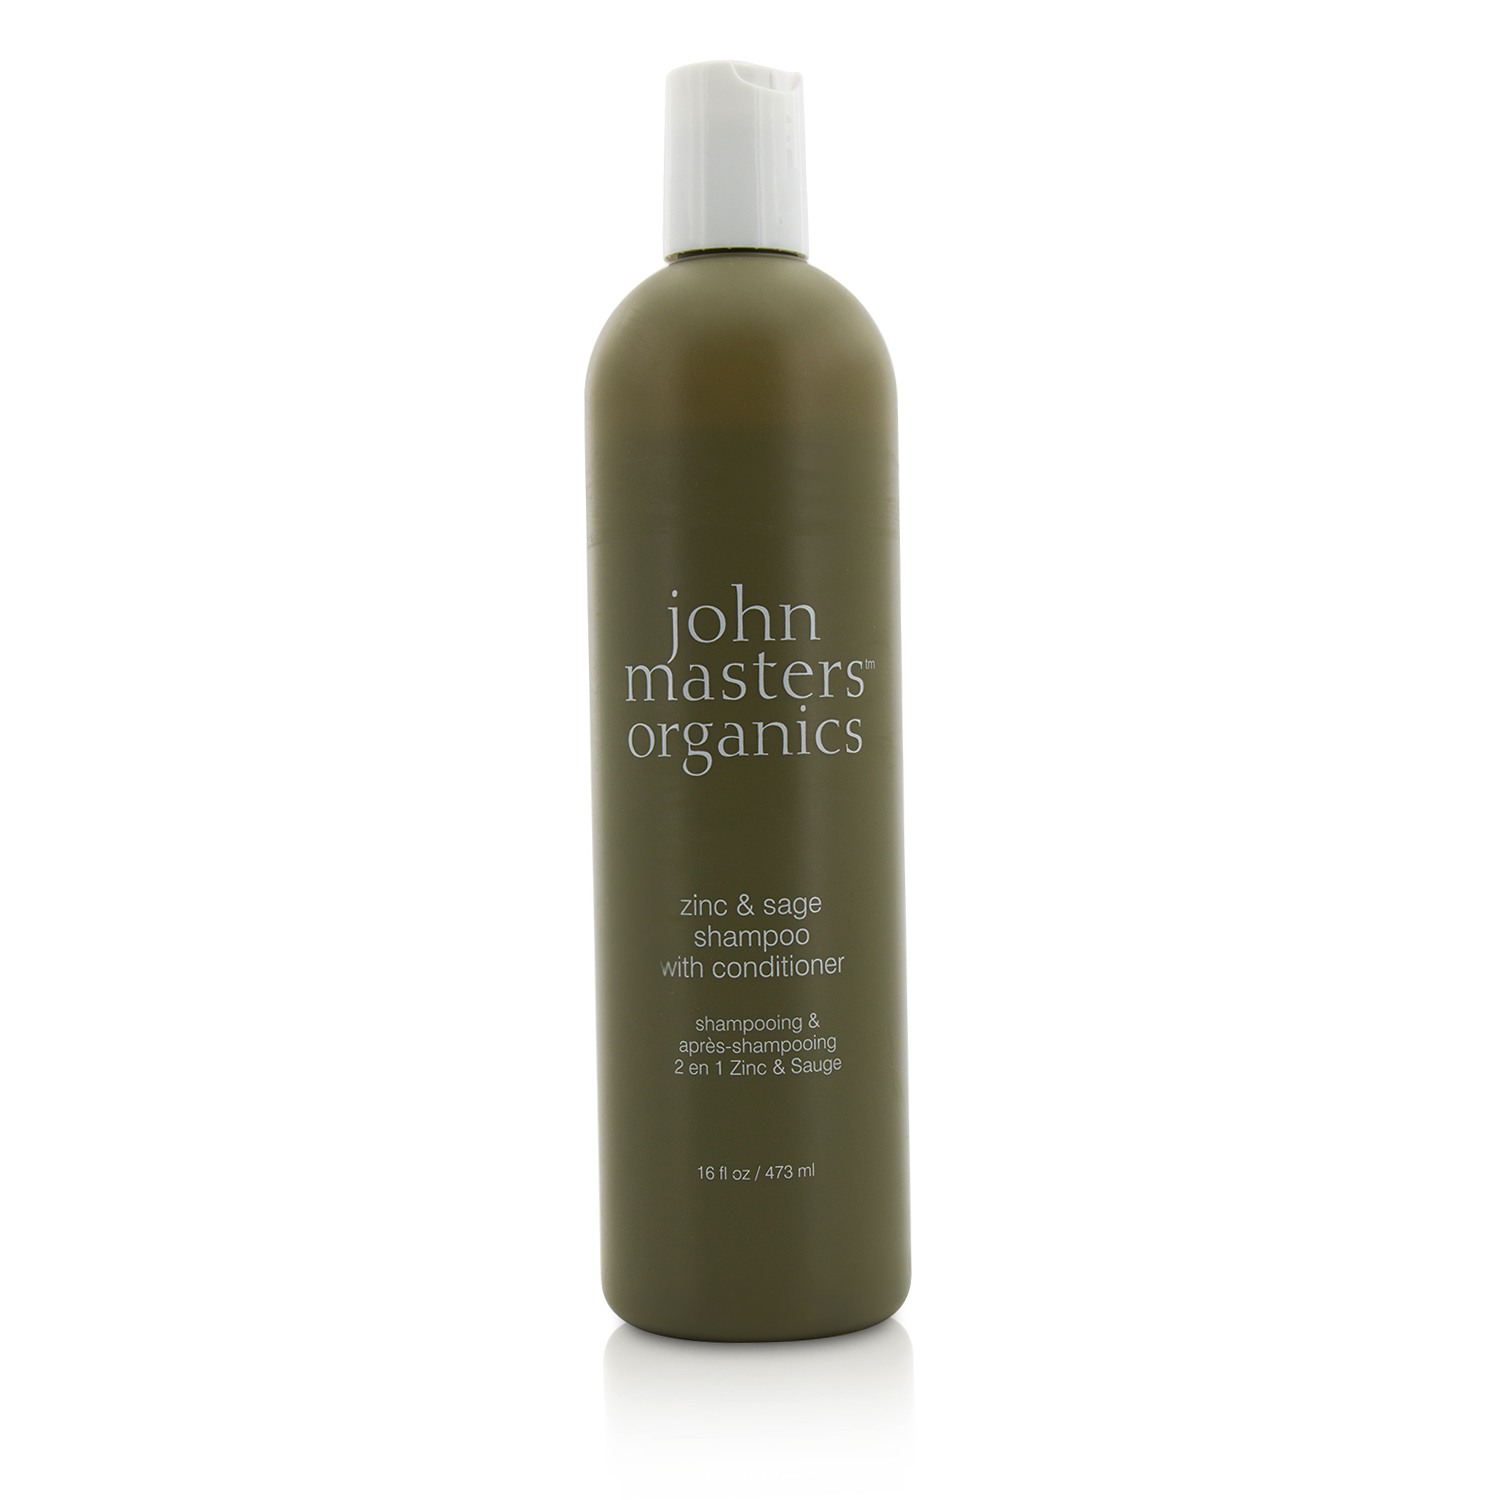 Zinc & Sage Shampoo with Conditioner John Masters Organics Image